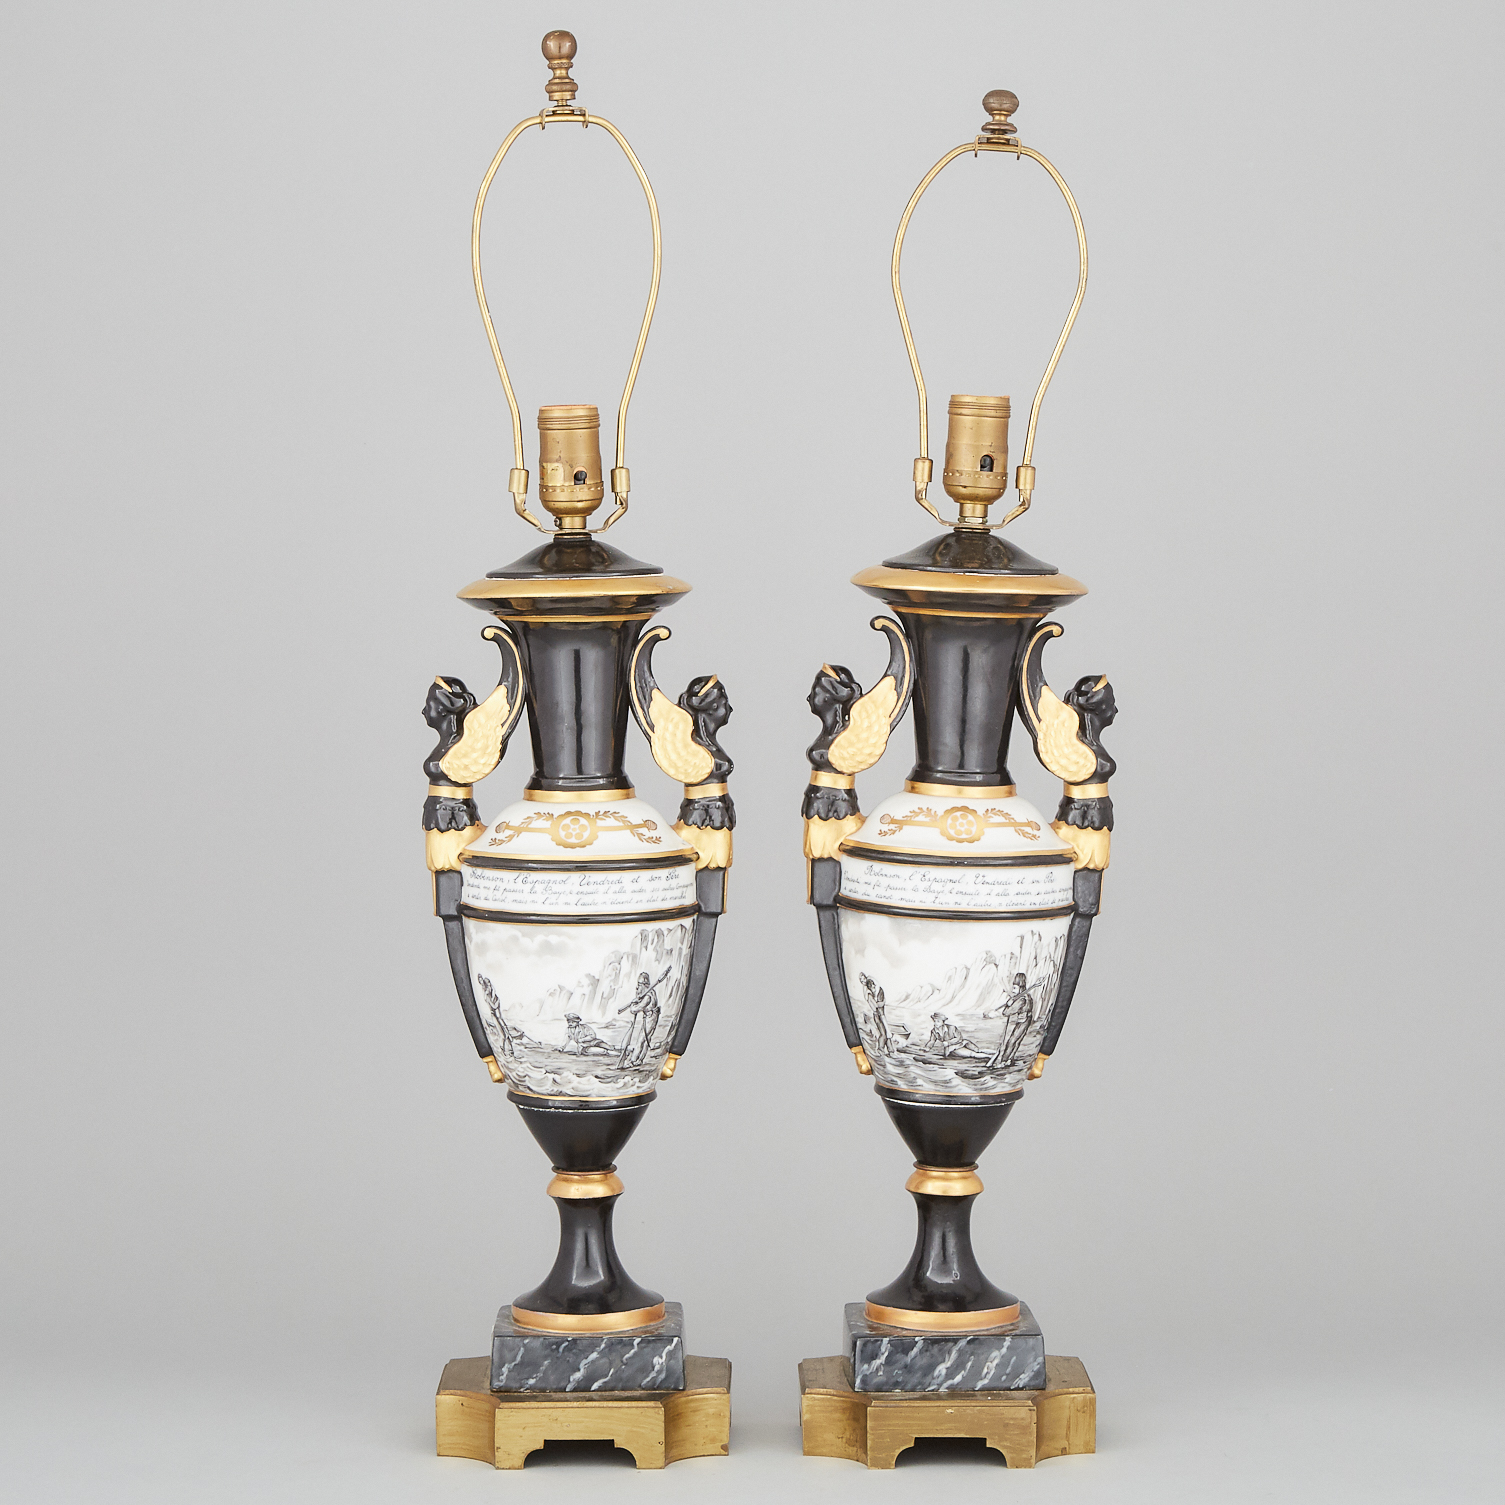 Pair of Paris Porcelain Urn Form Table Lamps, mid 20th century